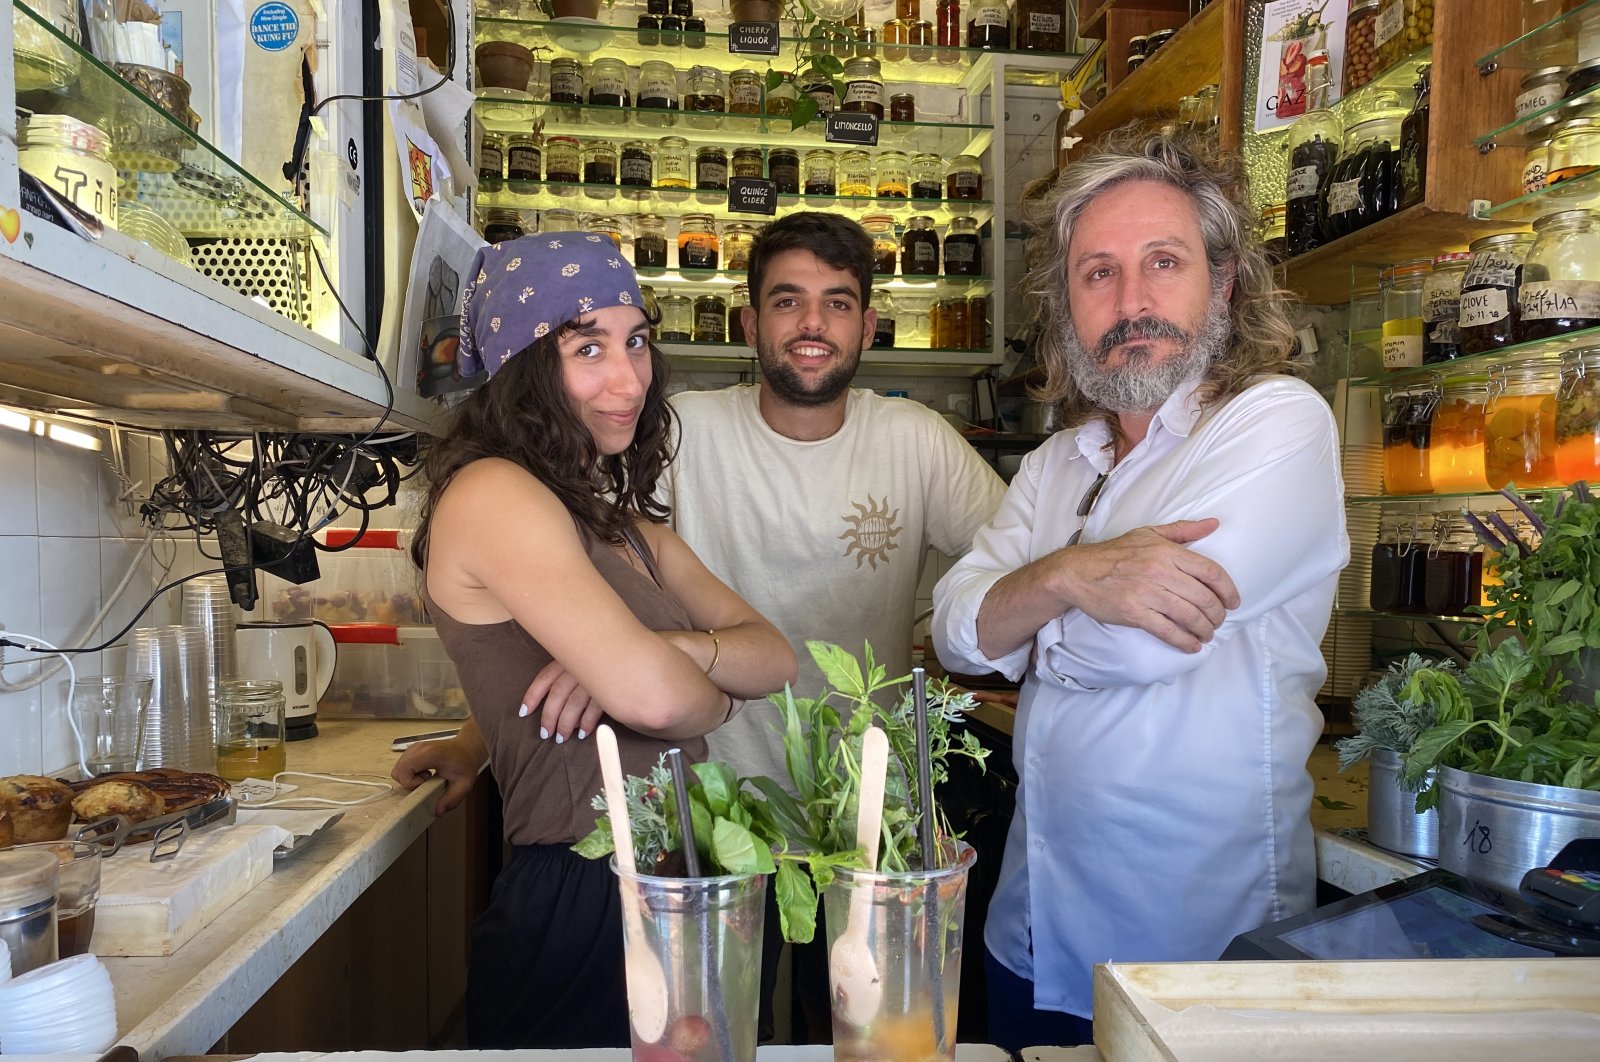 Israeli Benny Briga (r) in his kiosk, with his staff Eden (l) and Omri prepared the drink Gazoz in their kiosk at Levinsky Market, Tel Aviv, Israel, June 14, 2022. (DPA Photo)